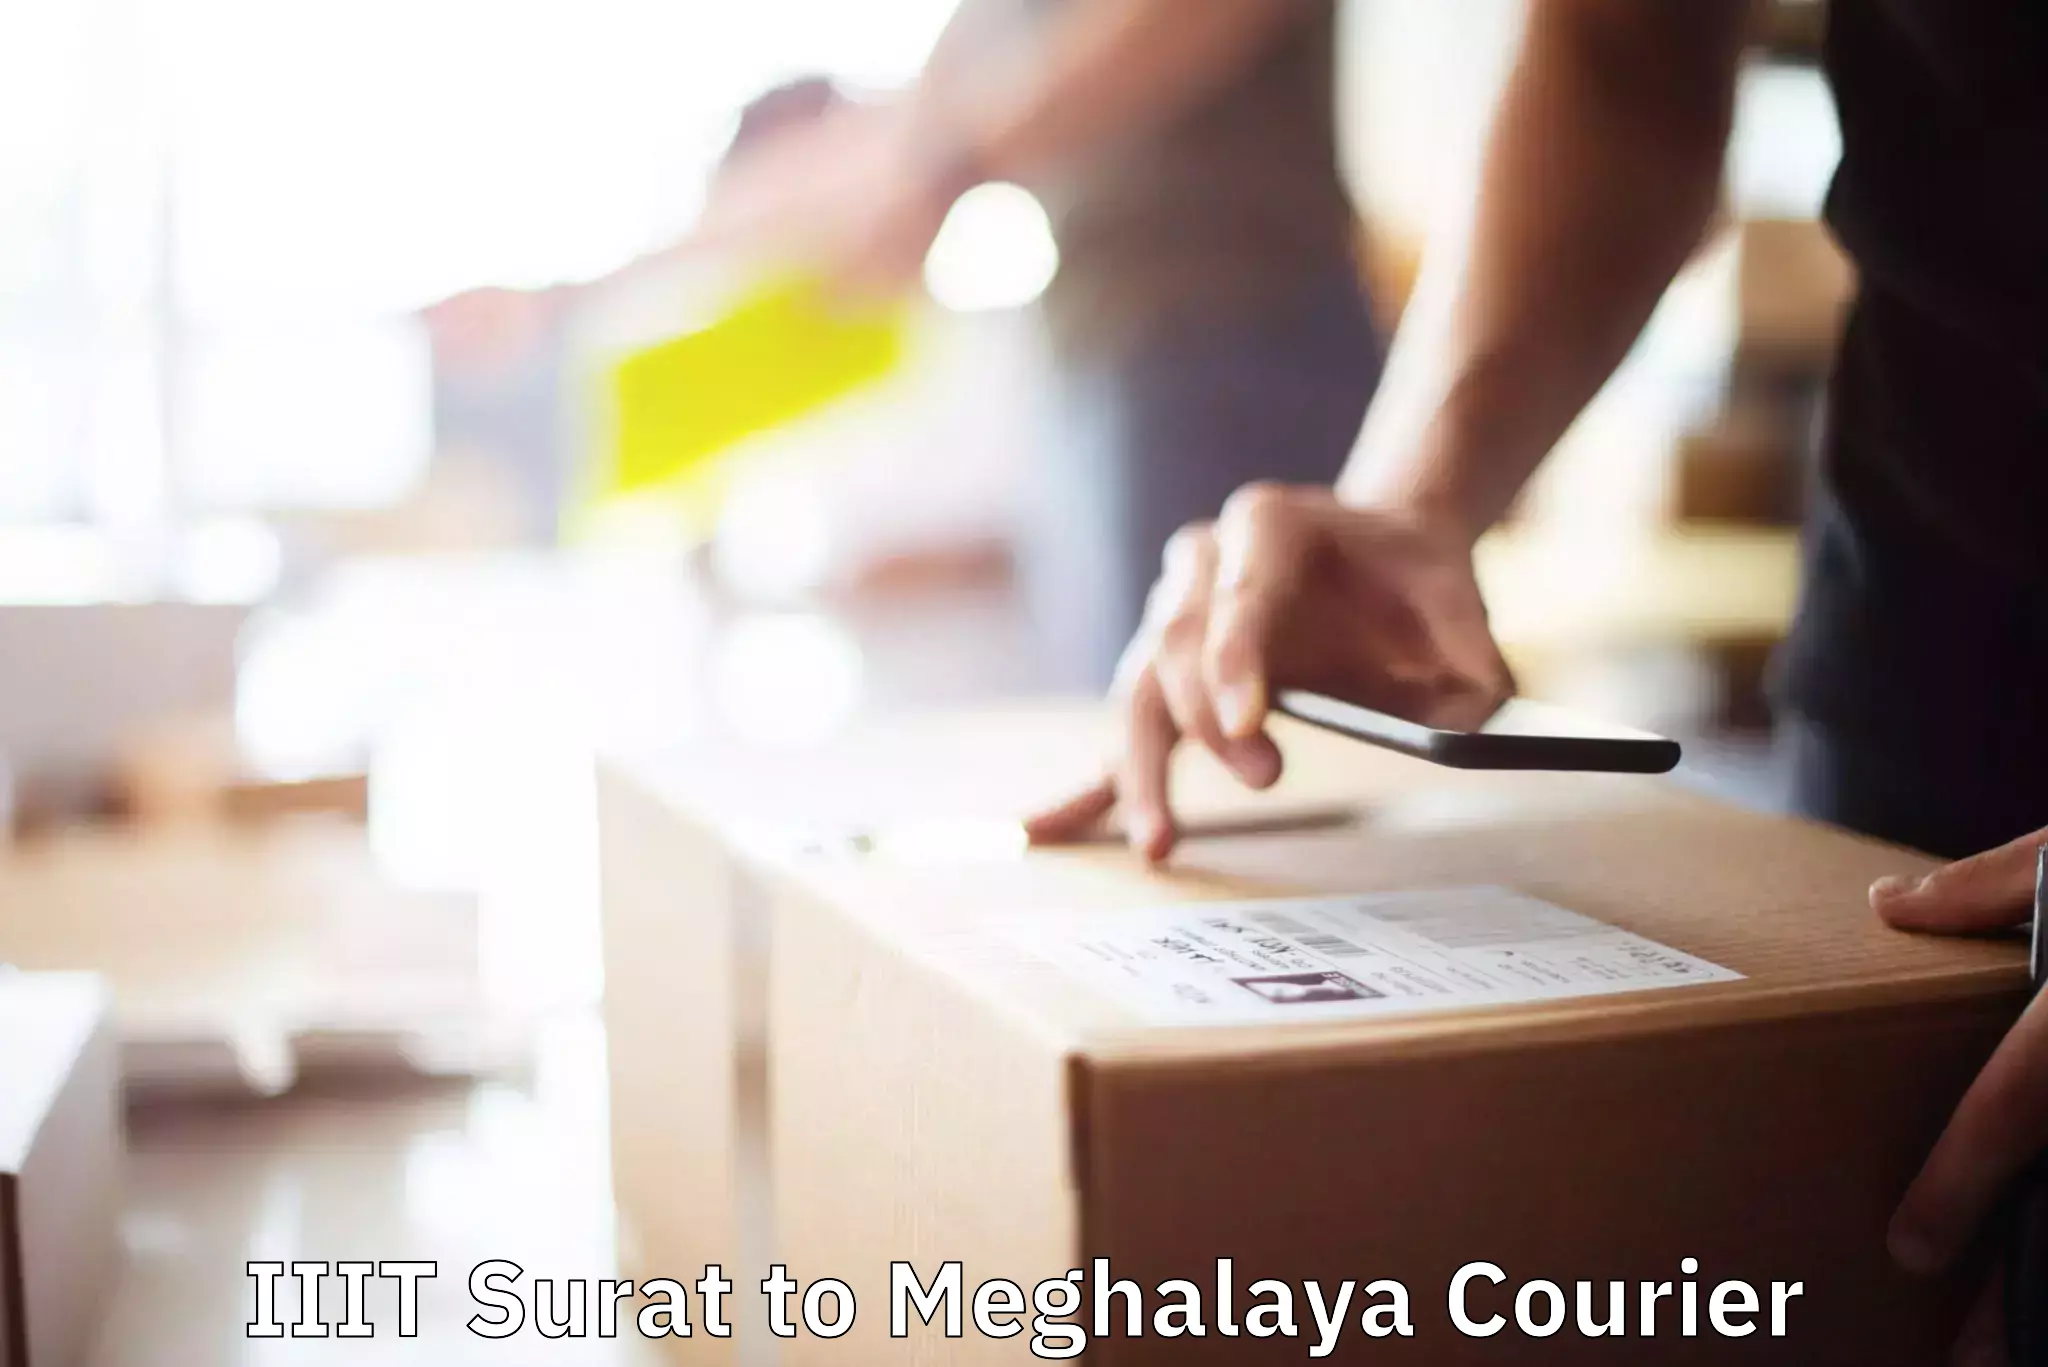 Efficient moving company IIIT Surat to Meghalaya